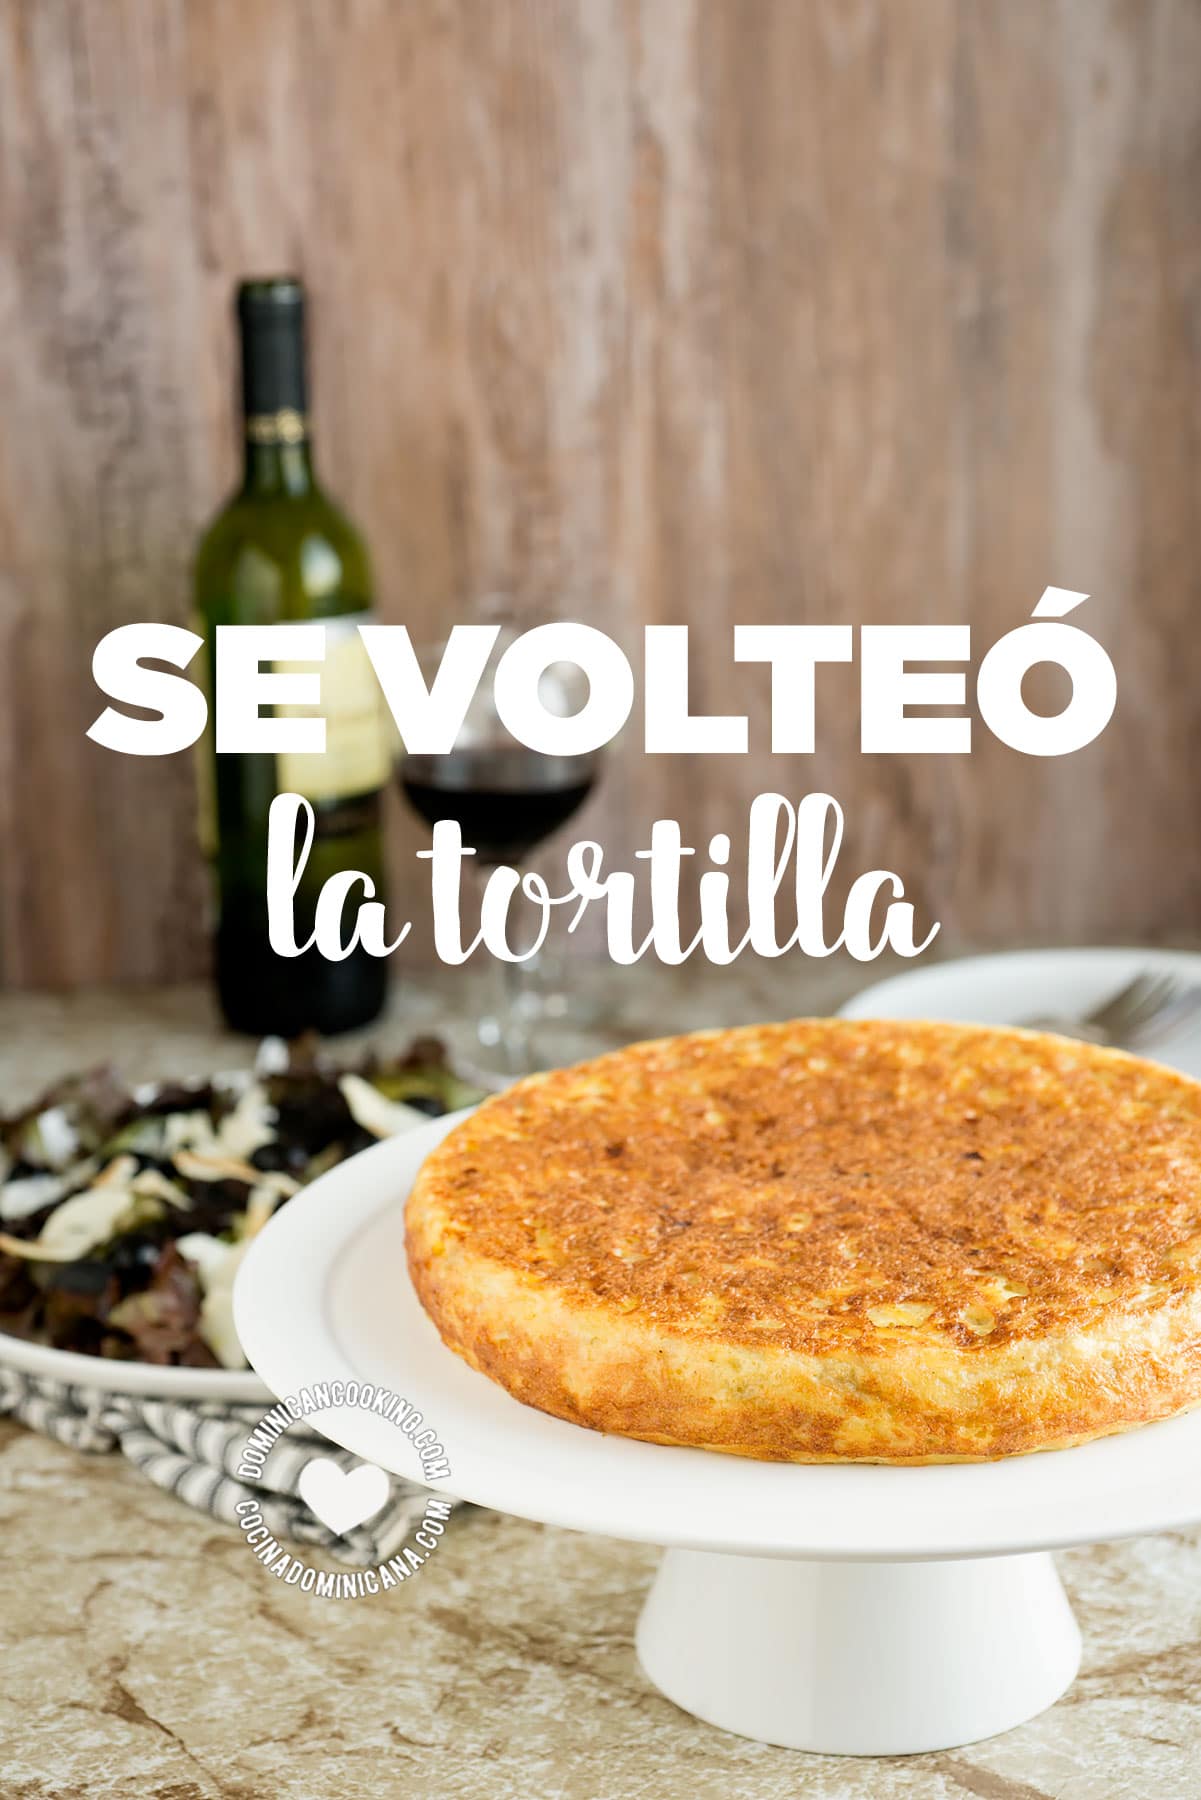 Spanish omelette with text: se volteó la tortilla.